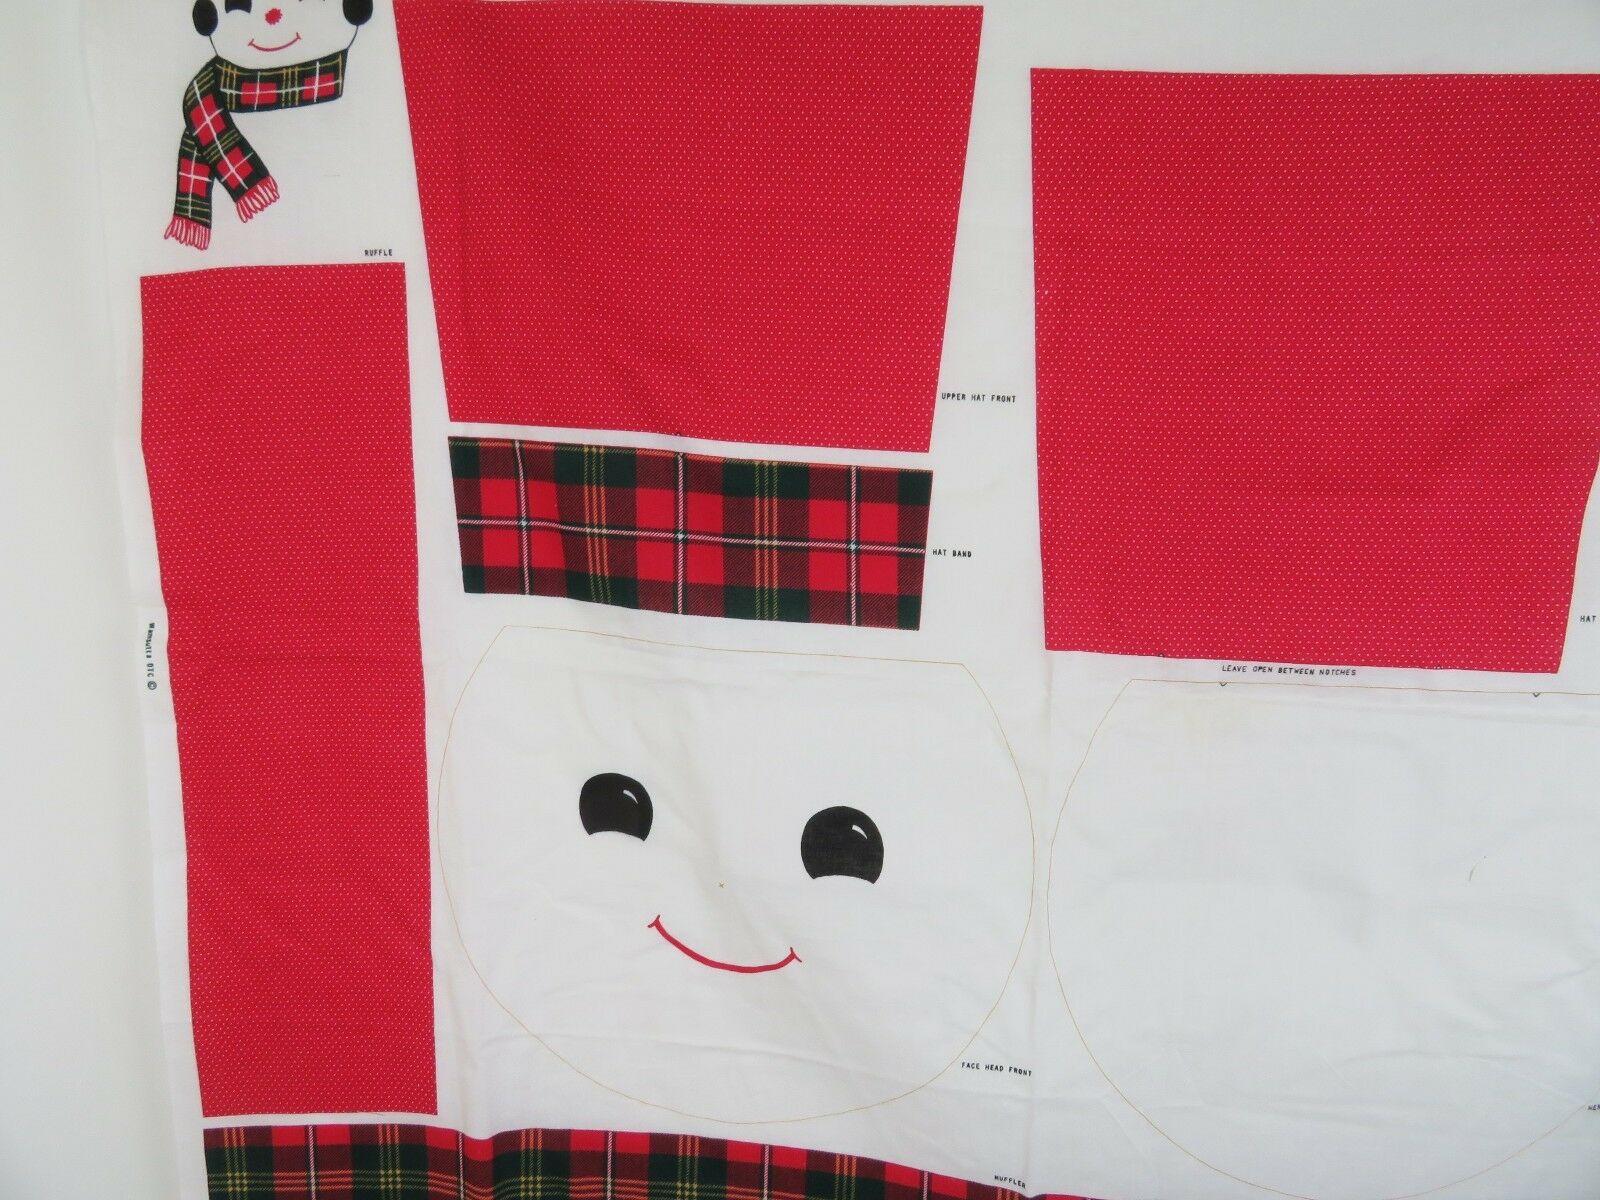 Christmas Door Hanging Panel Cut Sew Fabric Snowman Vintage Wamsutta Red Scarf - At Grandma's Table